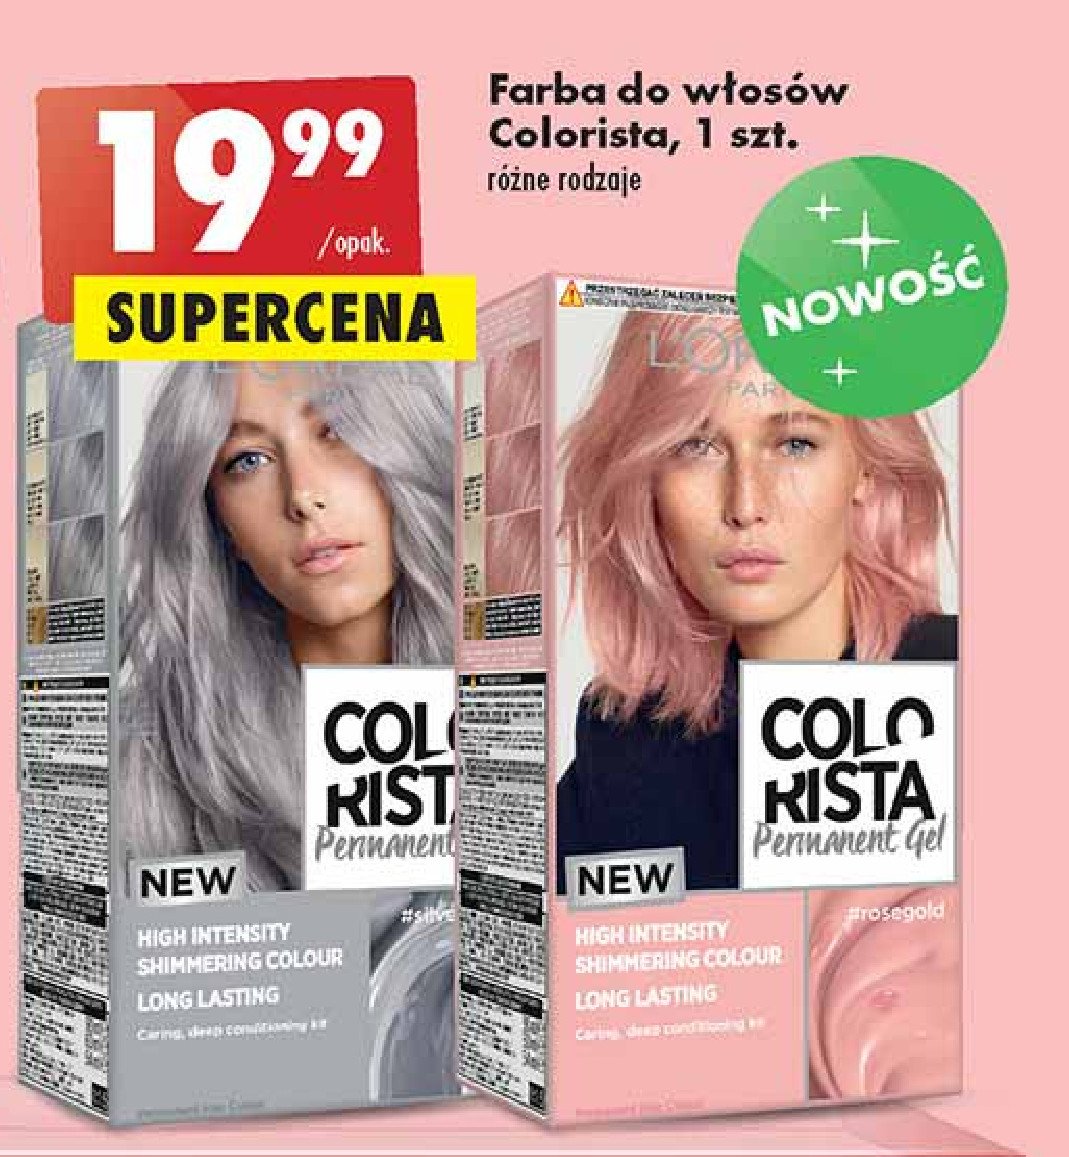 Farba do włosów #silvergray L'oreal colorista permanent gel promocja